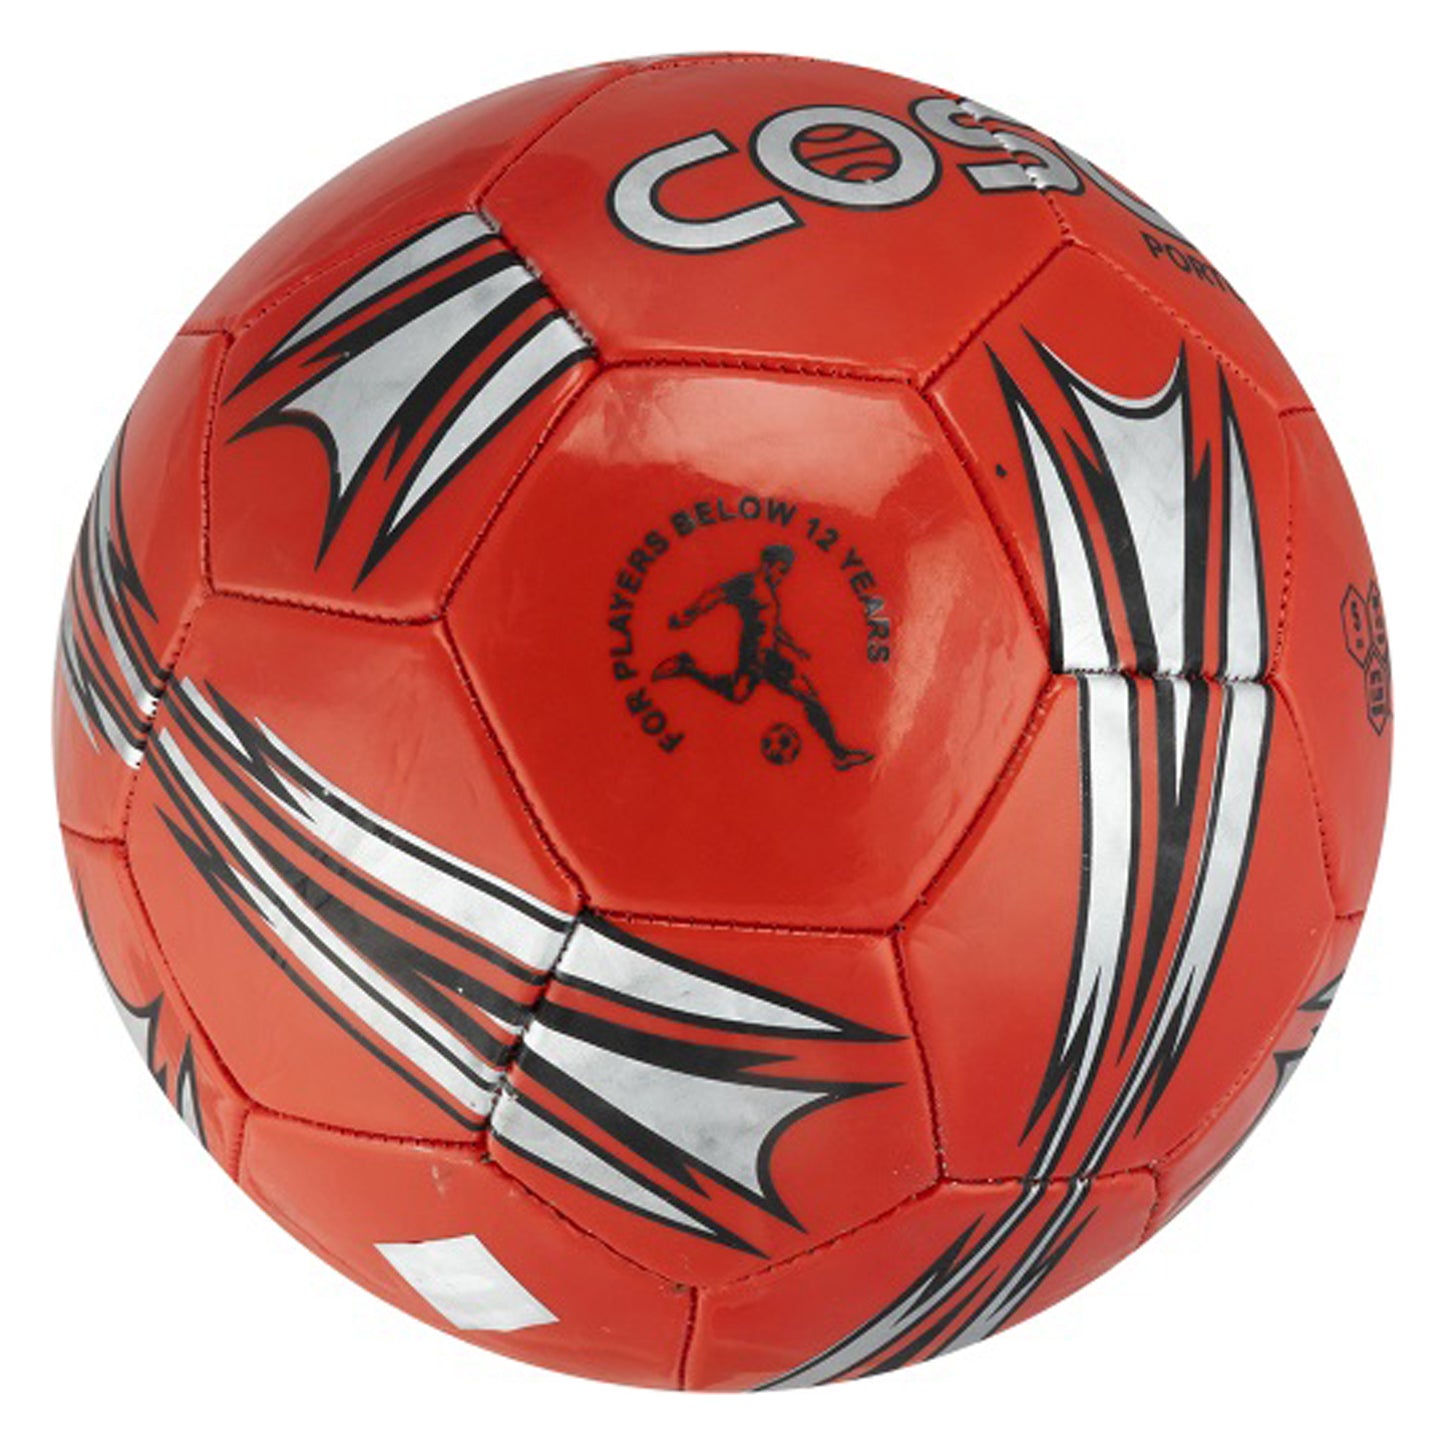 Cosco Portugal Football , Red/Black - Size 5 - Best Price online Prokicksports.com